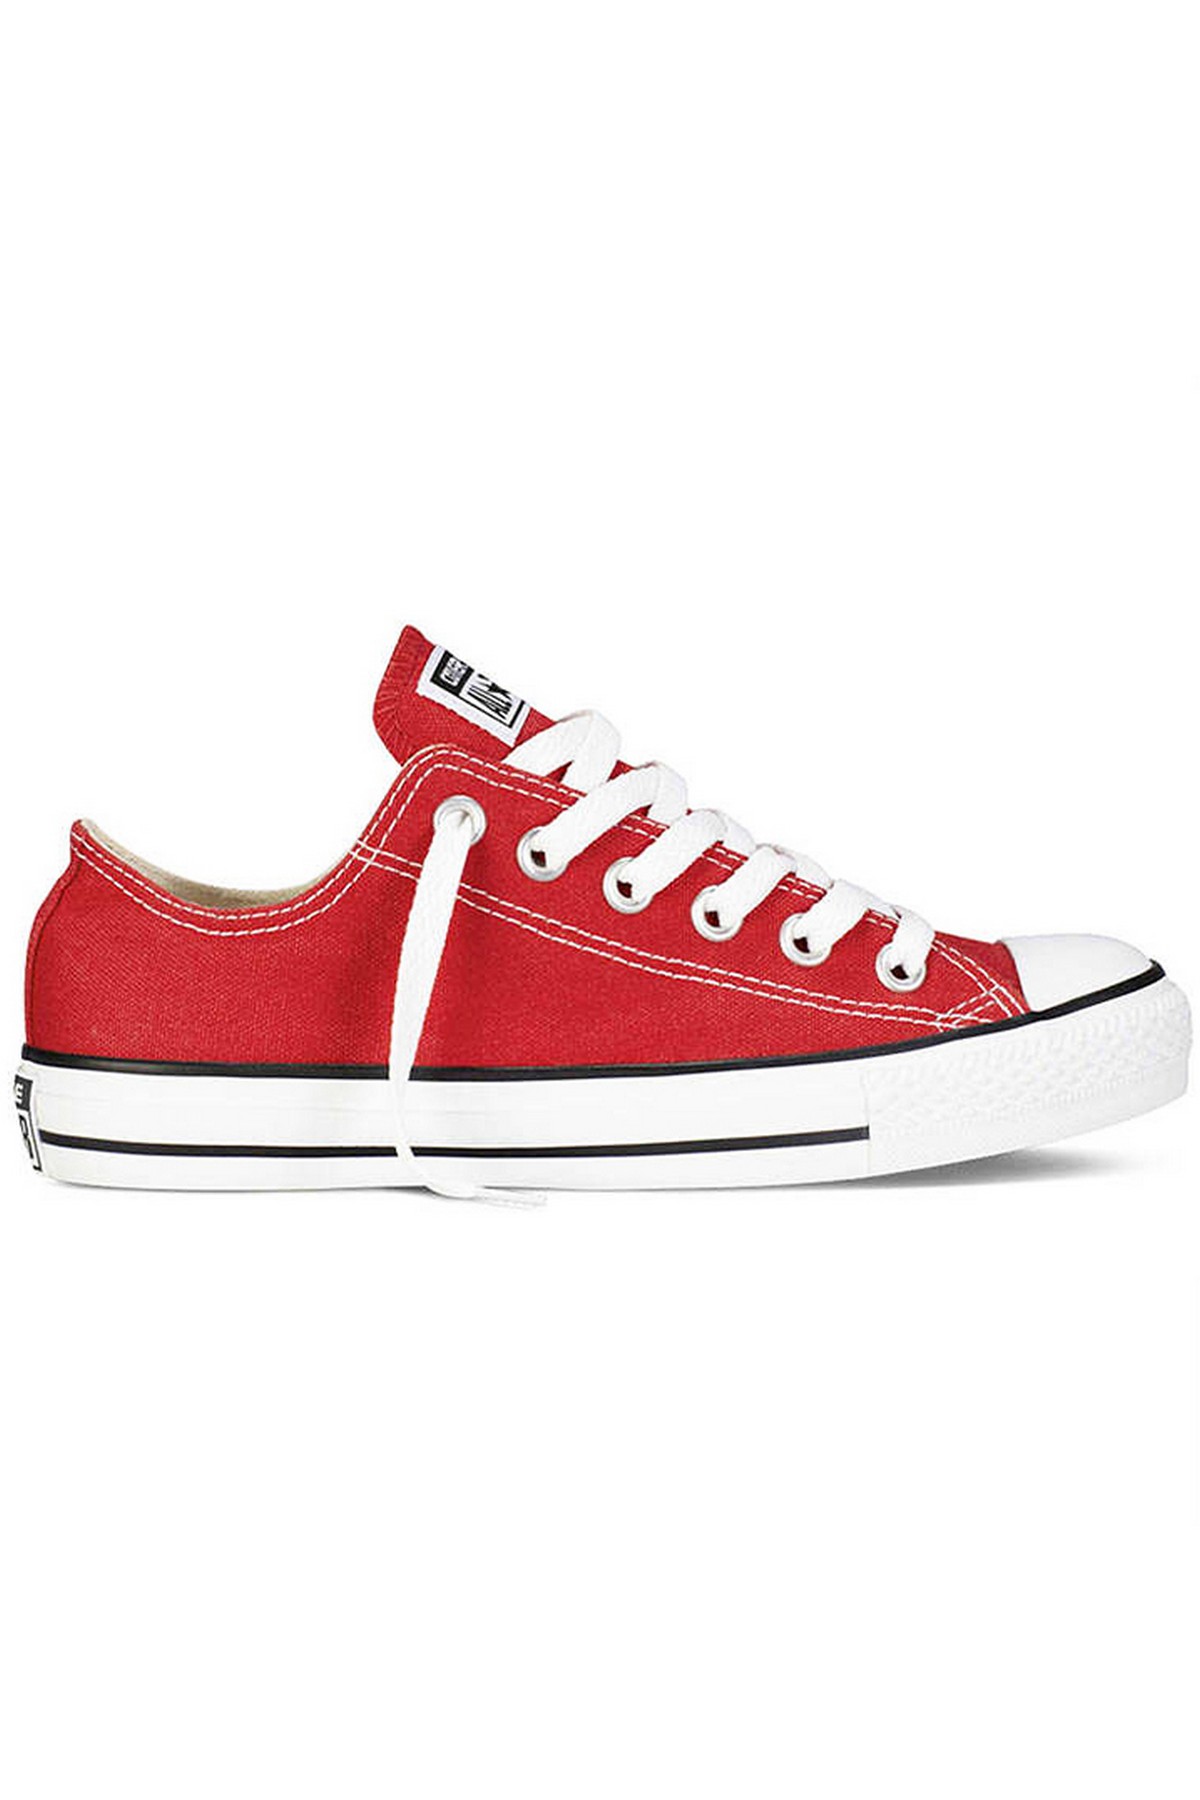 Converse M9696C - Chuck Taylor All Star Unisex Kırmızı Sneaker Ayakkabı